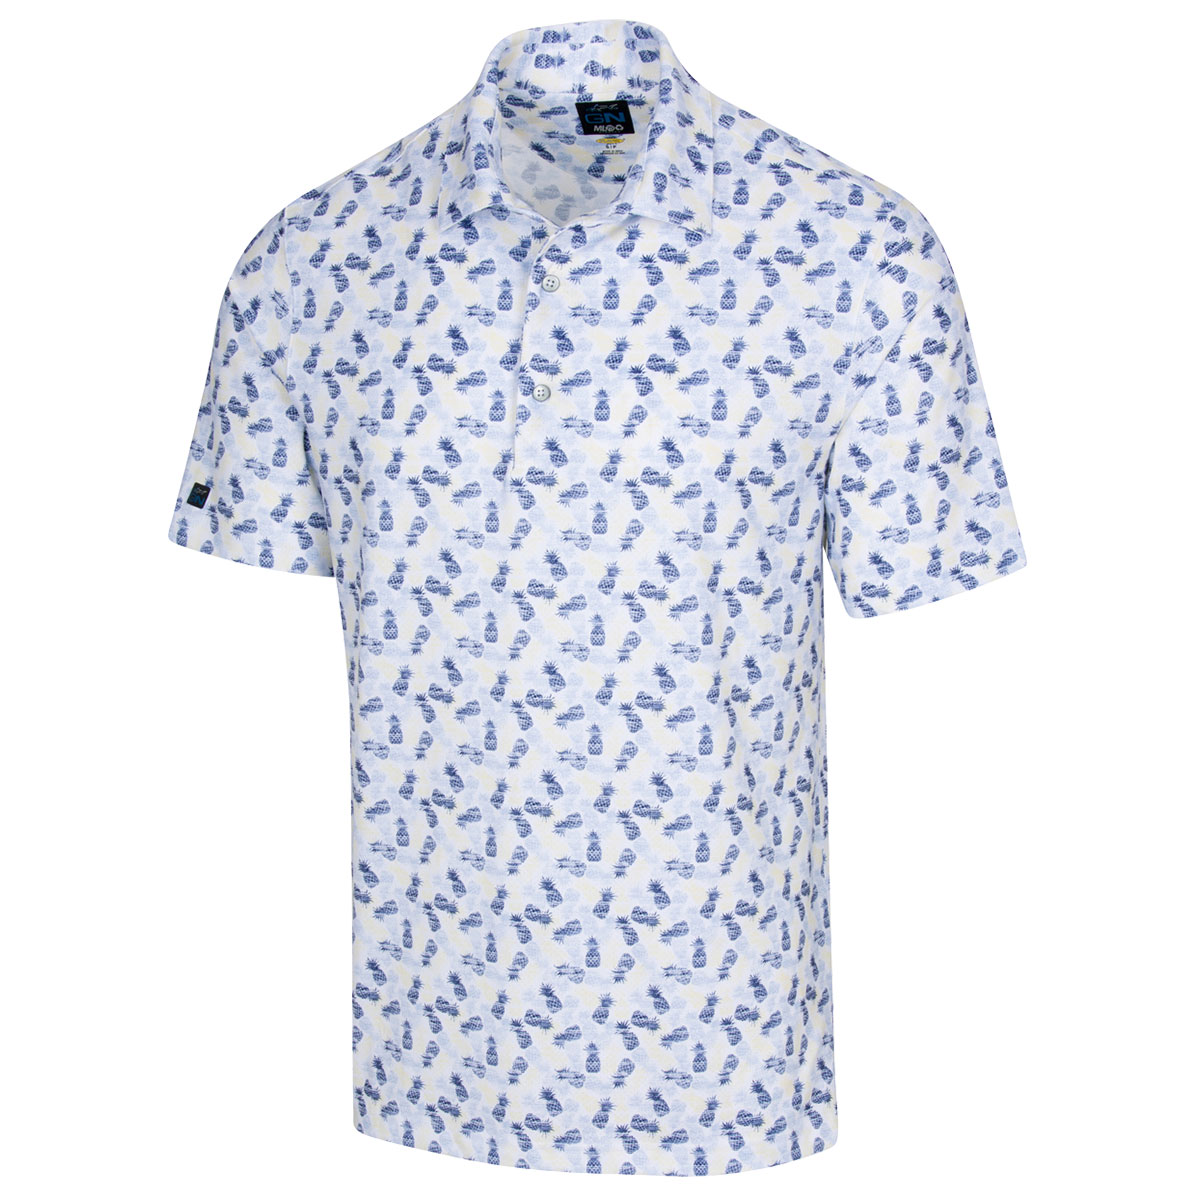 Greg Norman Men's Getaway Golf Polo Shirt from american golf